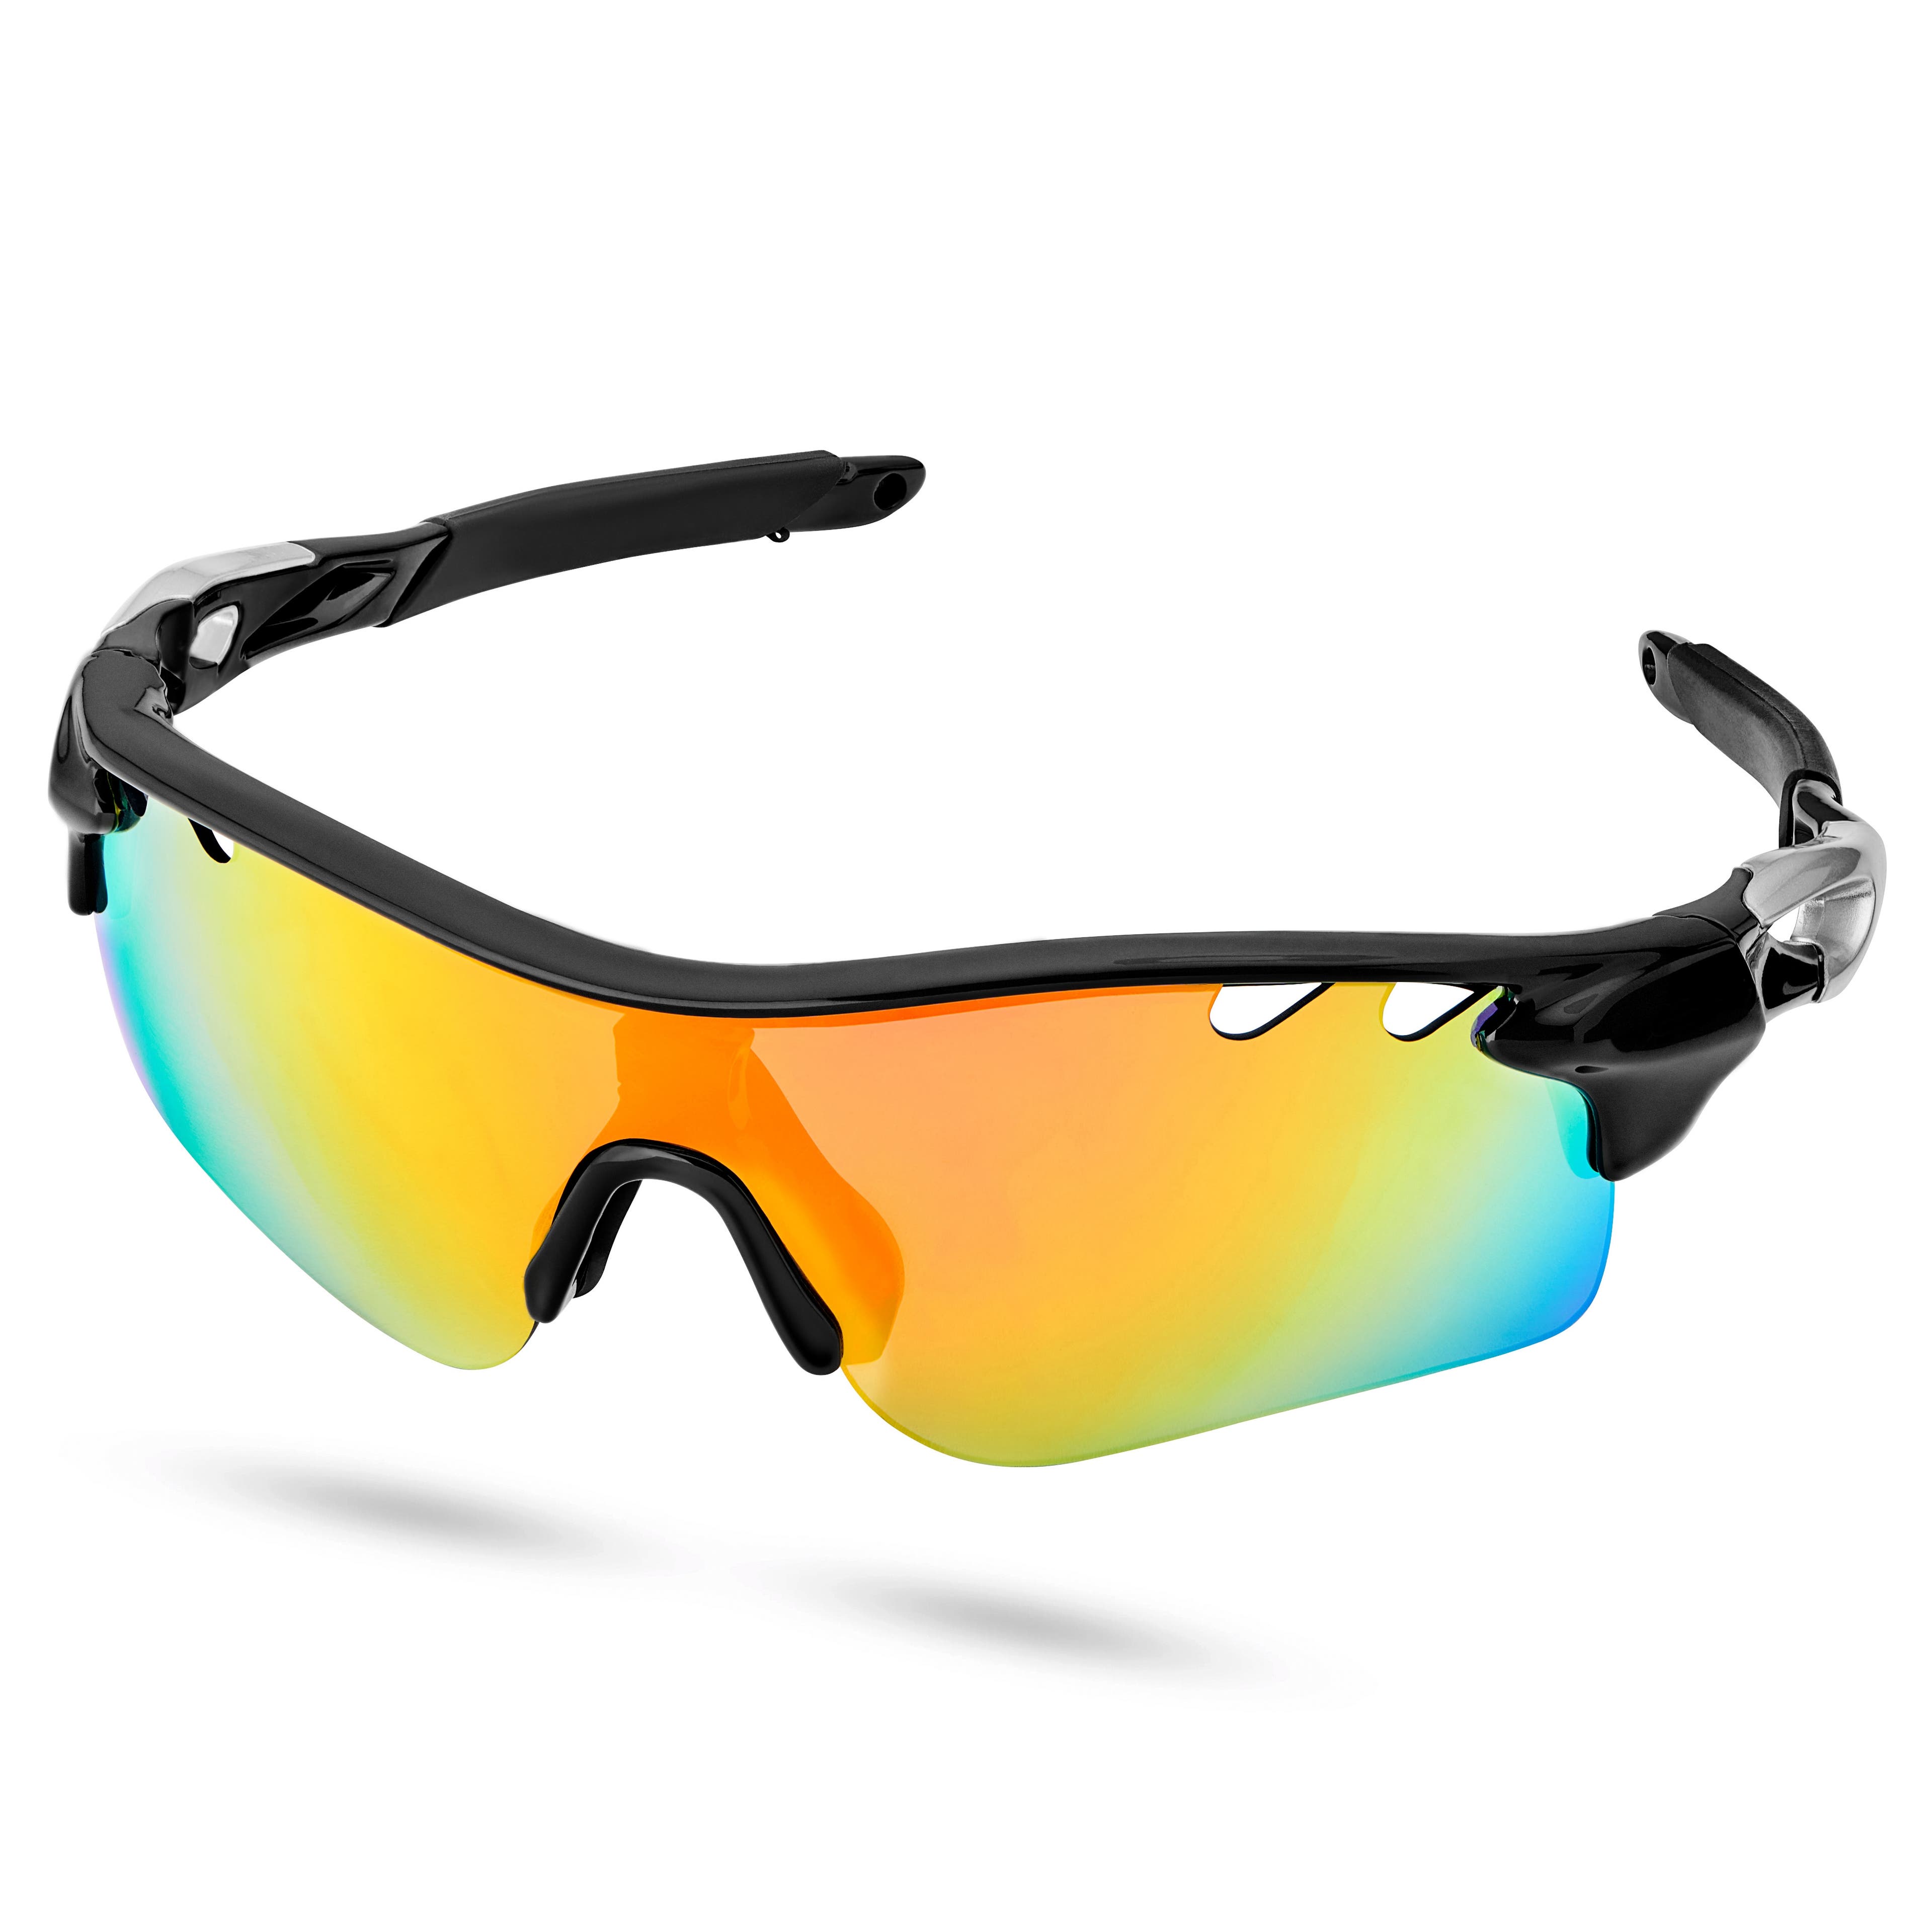 Óculos de Sol Desportivos Pretos e Cinza com Lentes Intercambiáveis